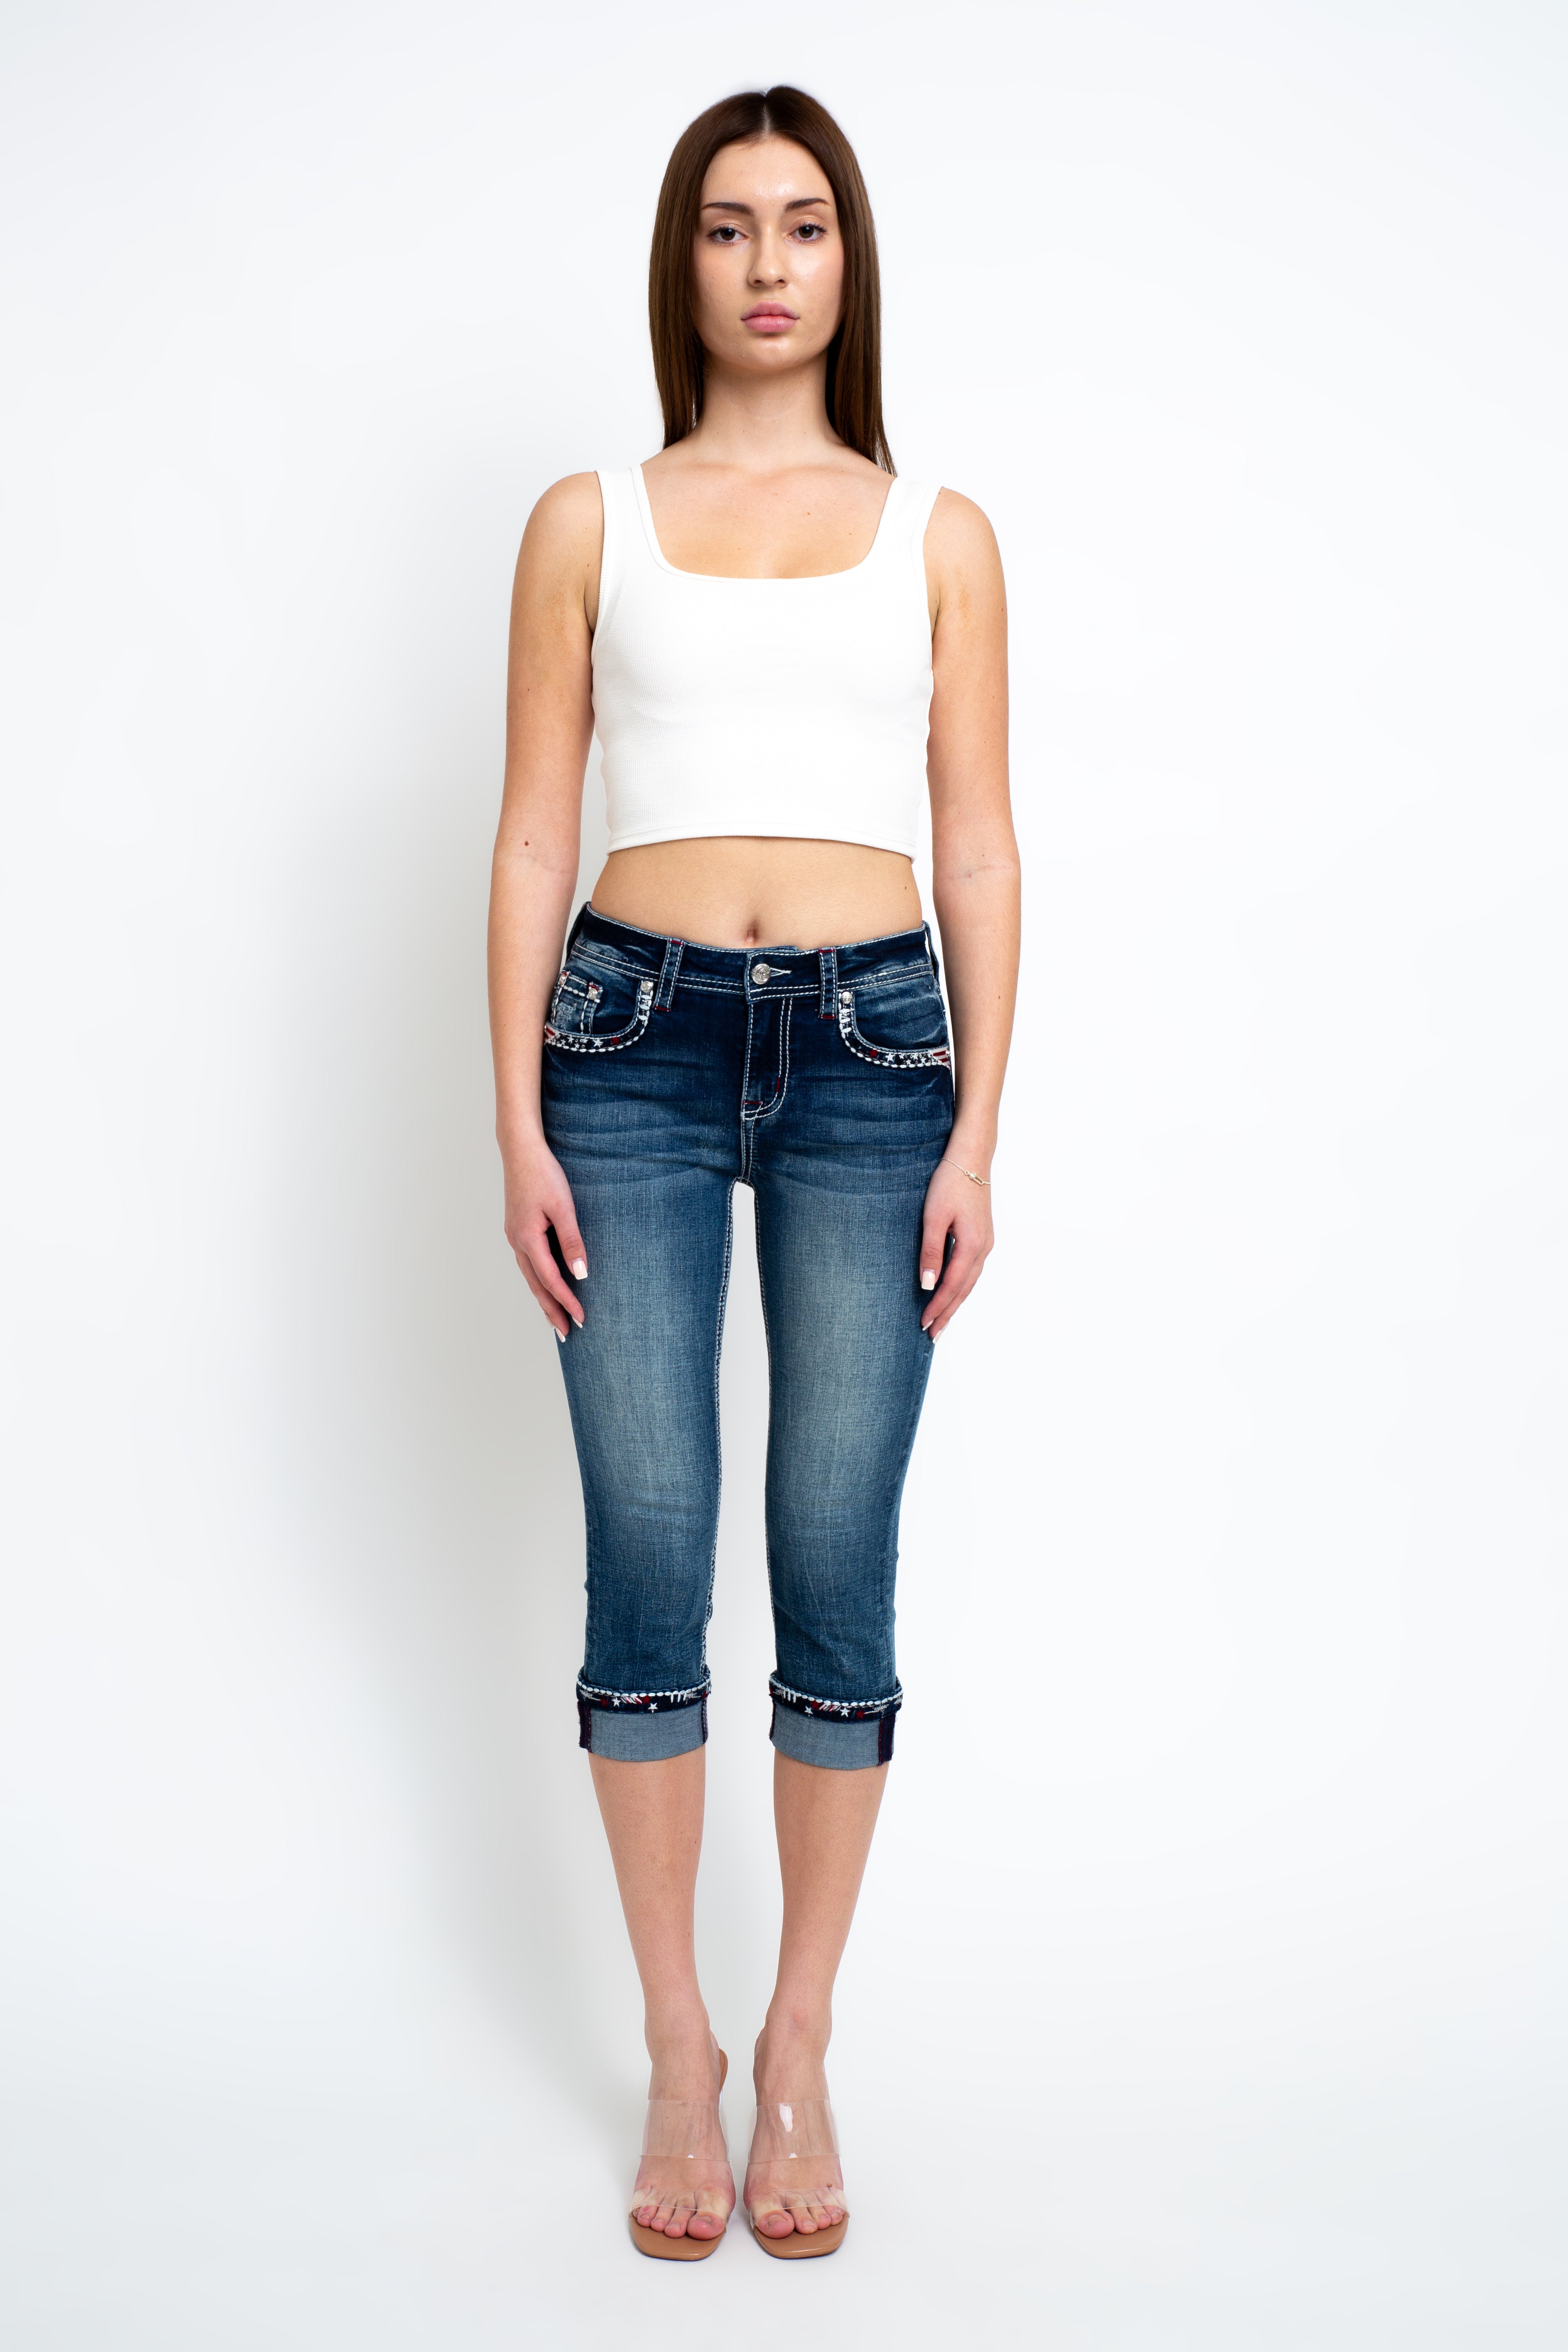 embellished-jeans-womens-capris-bootcut-jeans-embellish-jeans-grace-in-la